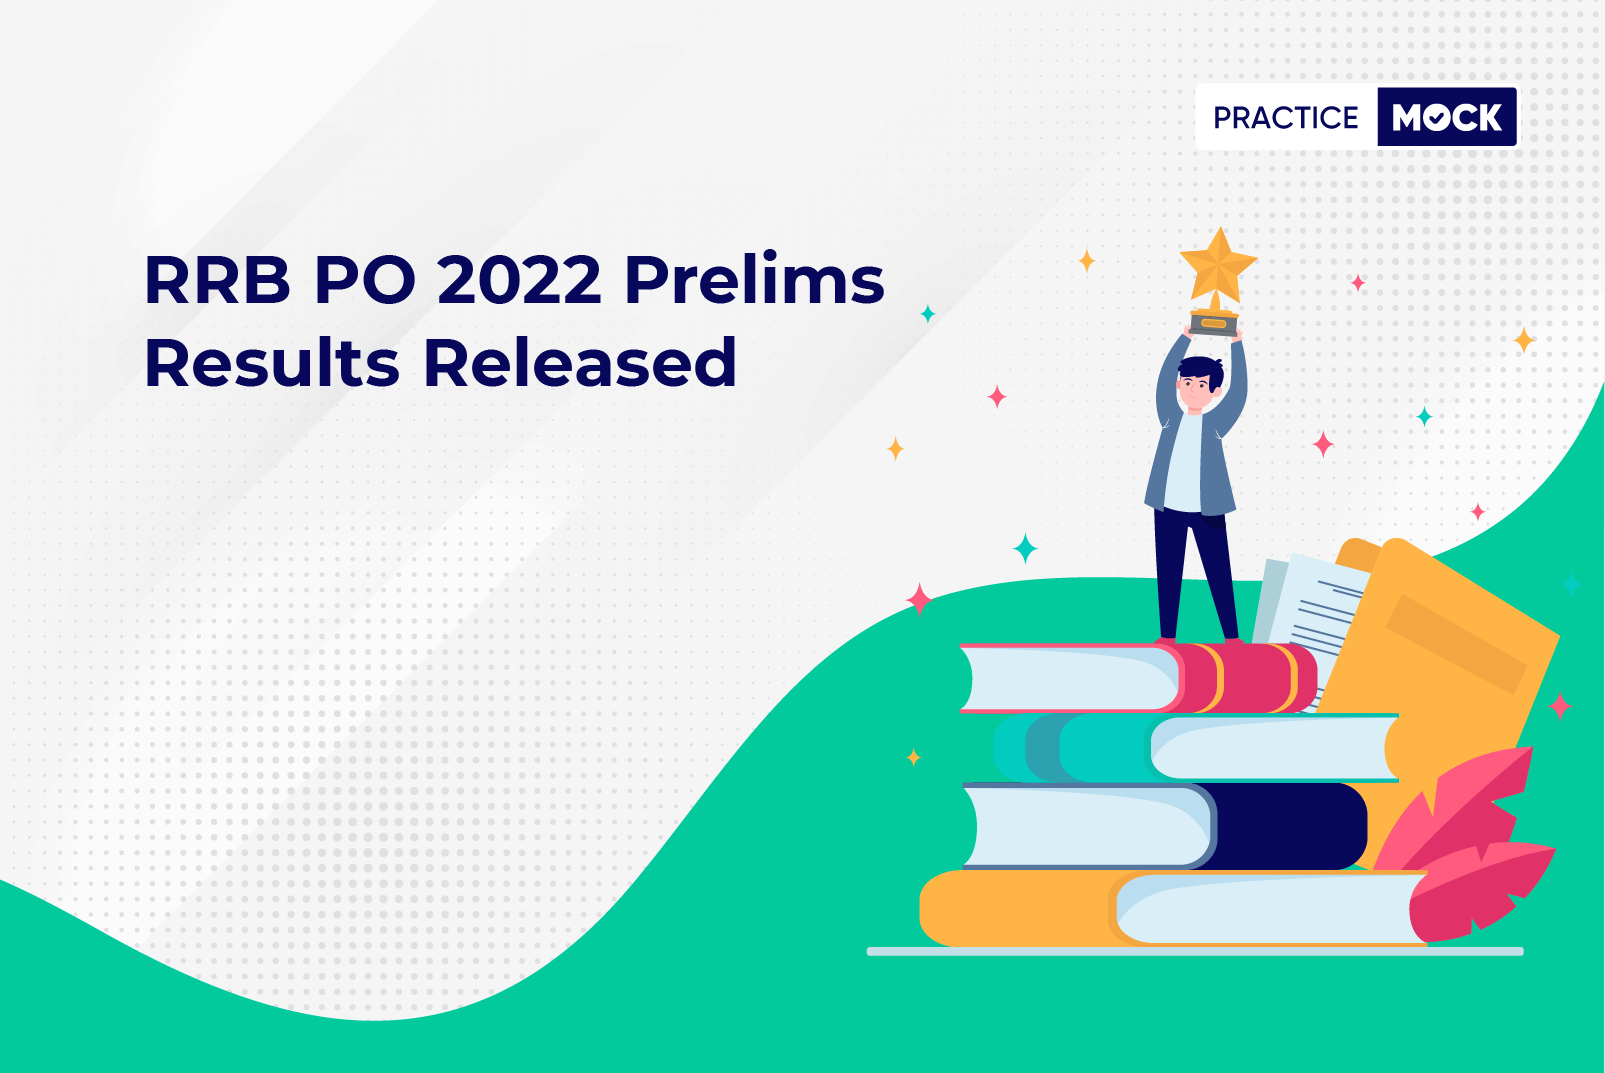 RRB PO 2022 Prelims Results Released